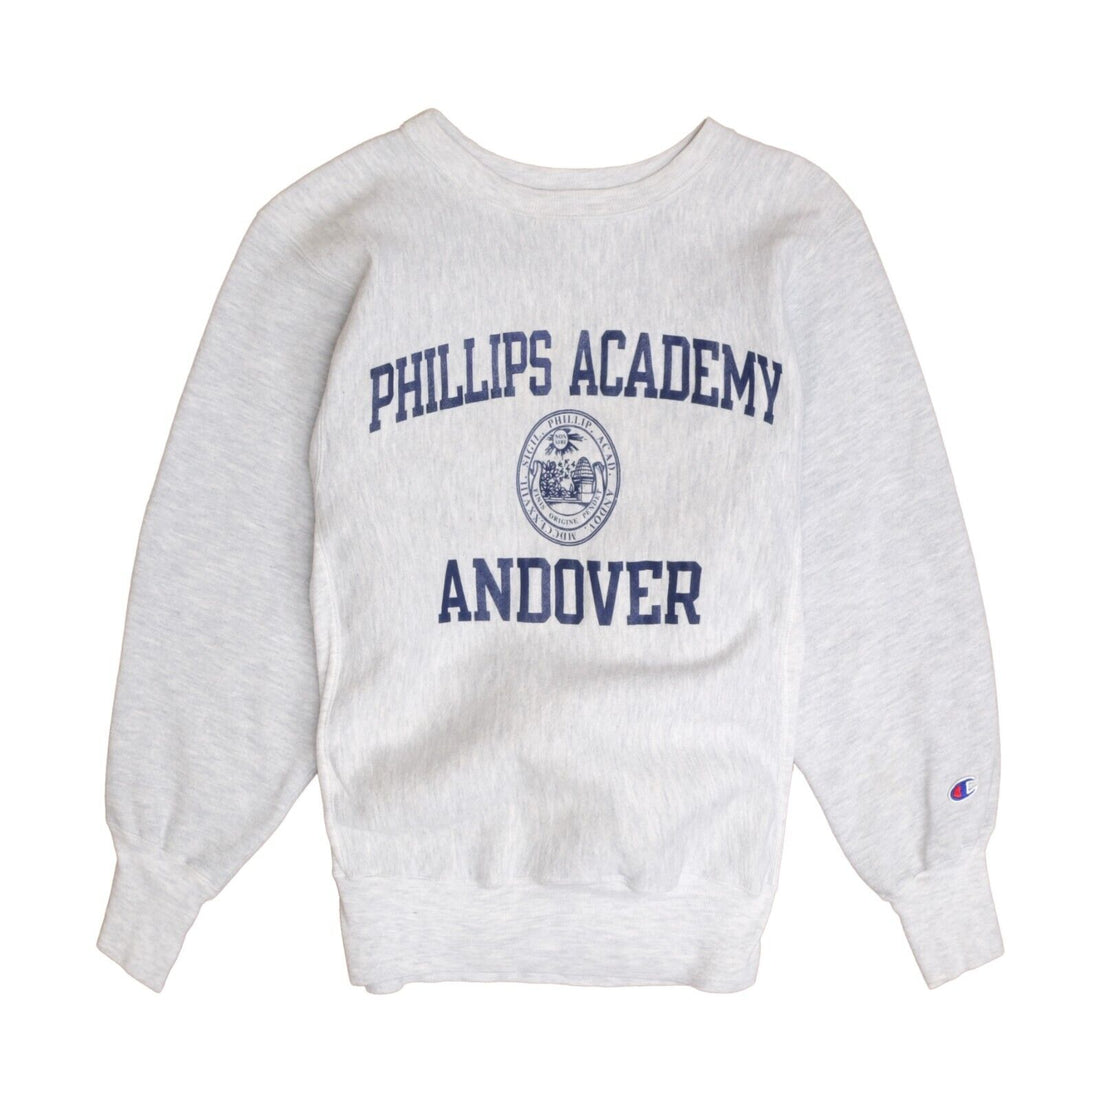 Vintage Phillips Academy Andover Champion Reverse Weave Sweatshirt Small 90s